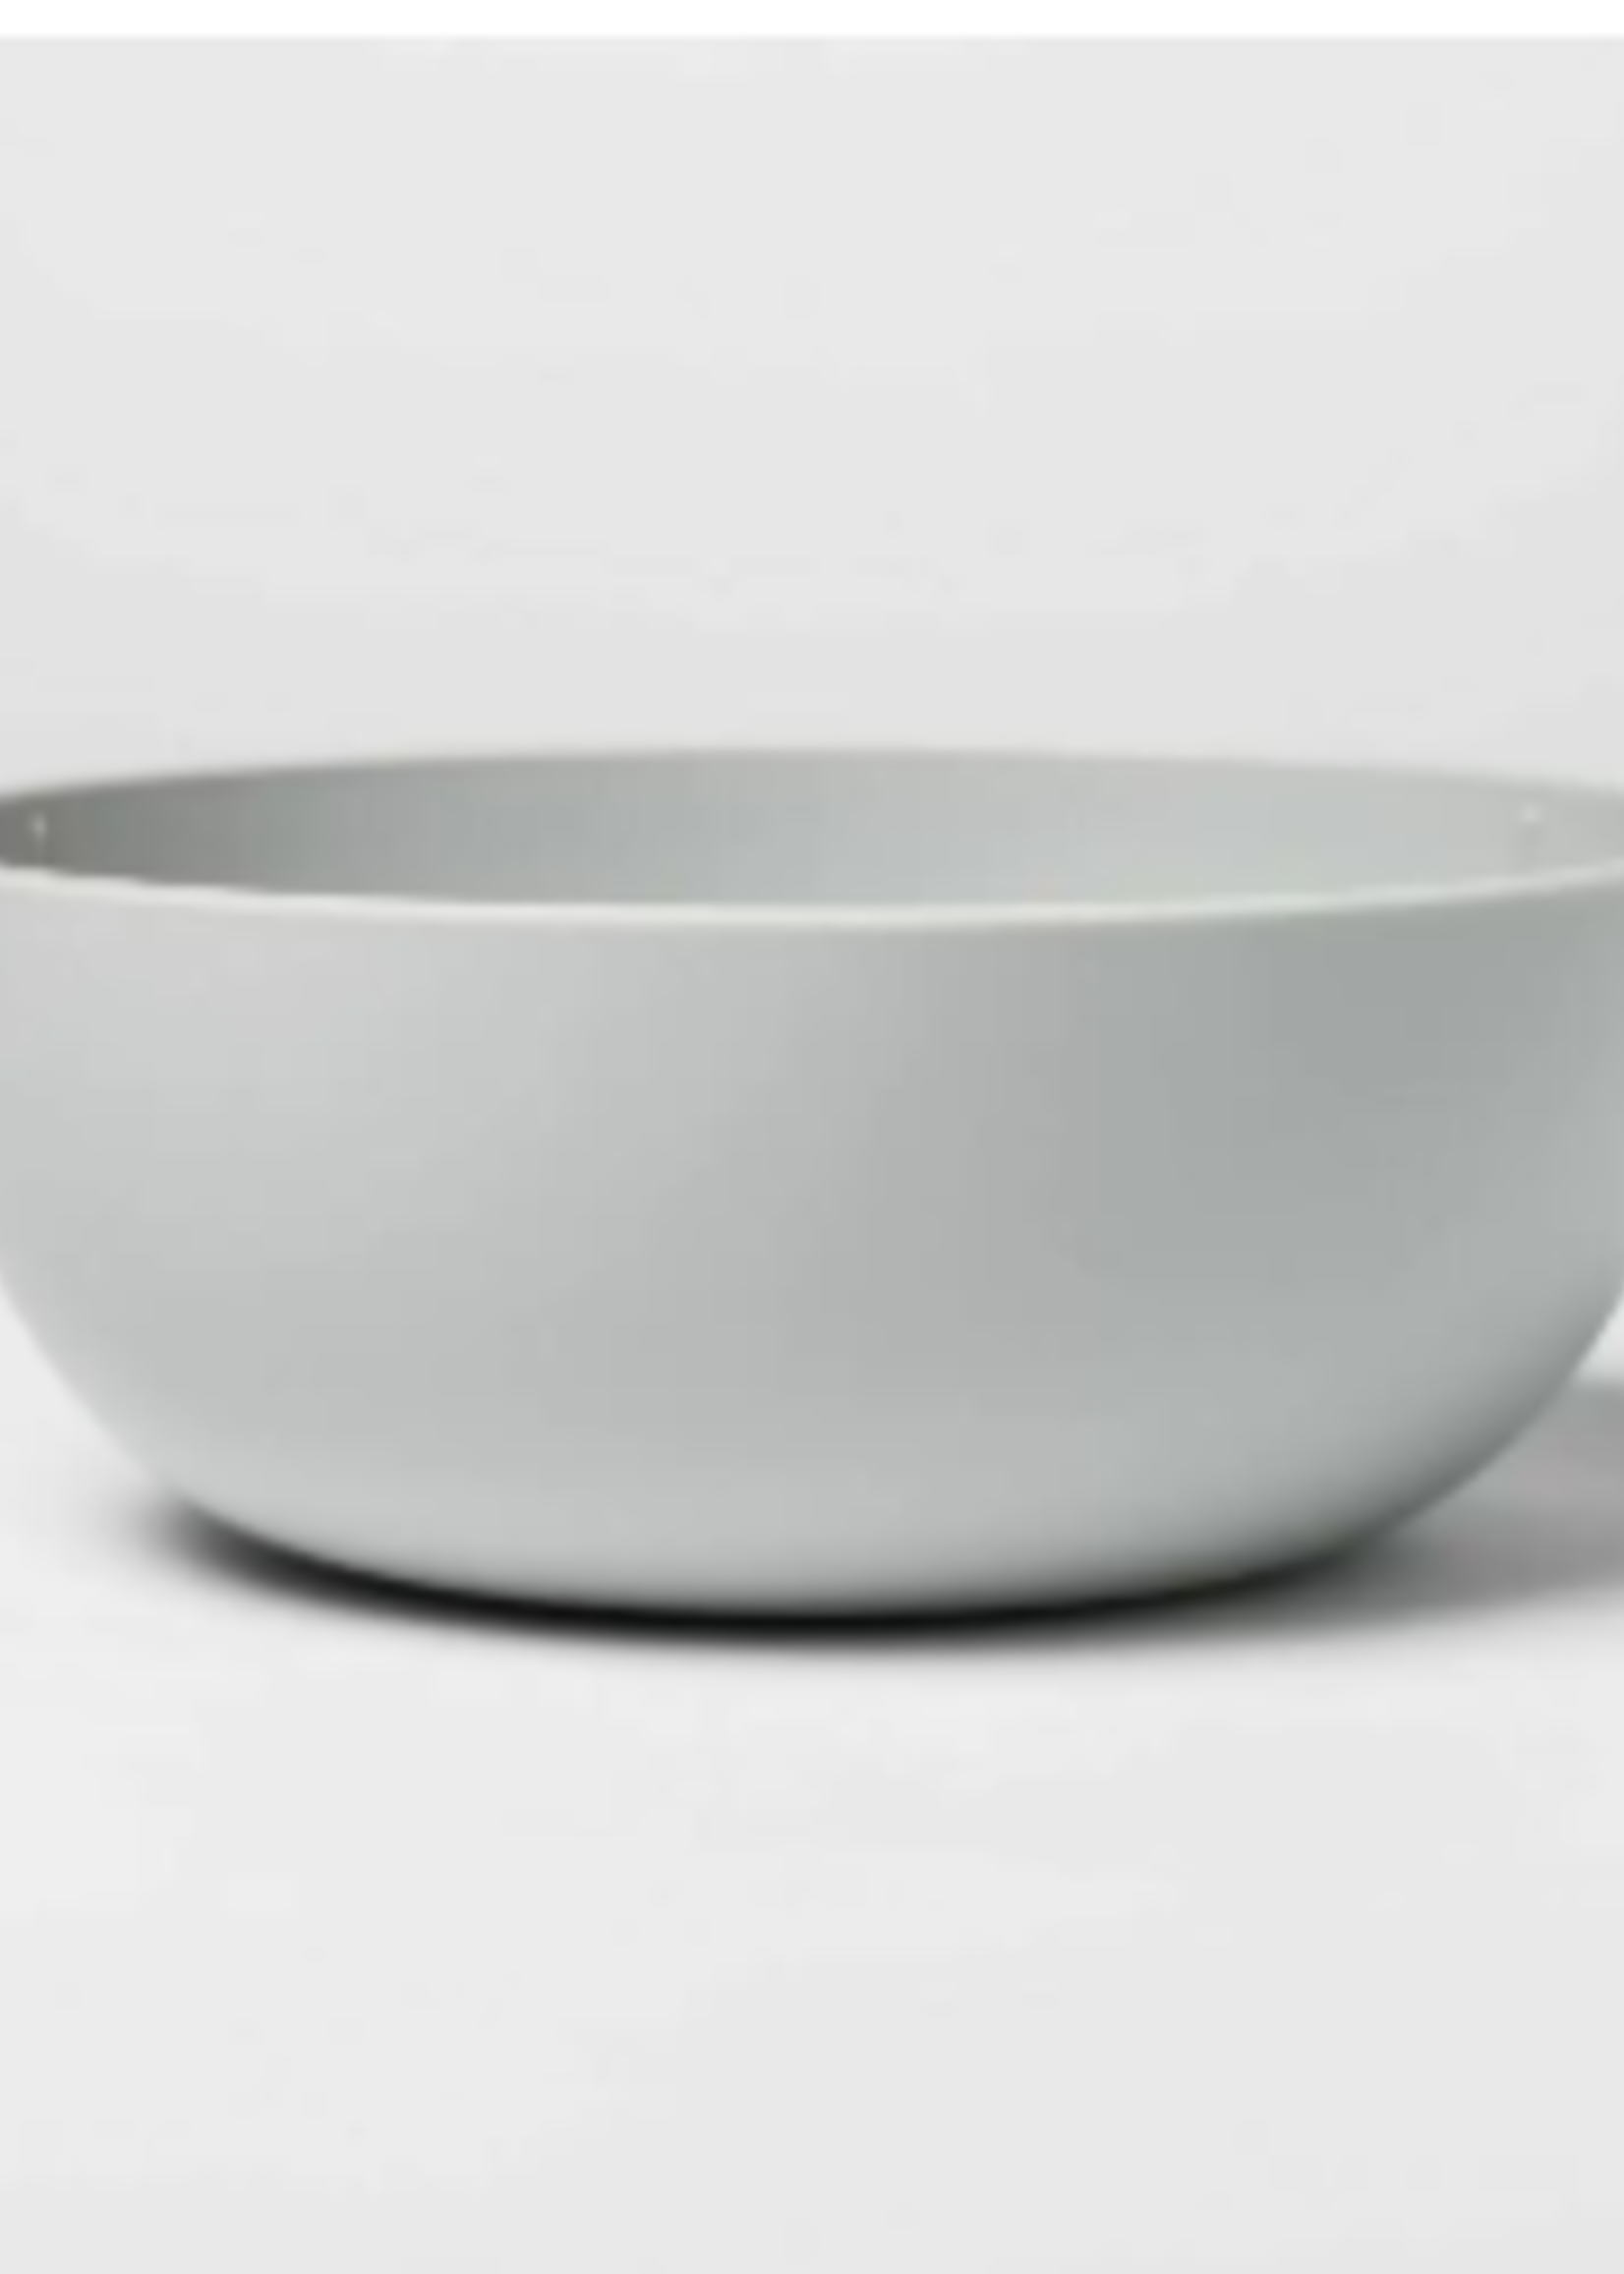 https://cdn.shoplightspeed.com/shops/649400/files/48249455/1652x2313x1/37oz-lastic-37oz-plastic-cereal-bowl-gray-room-ess.jpg